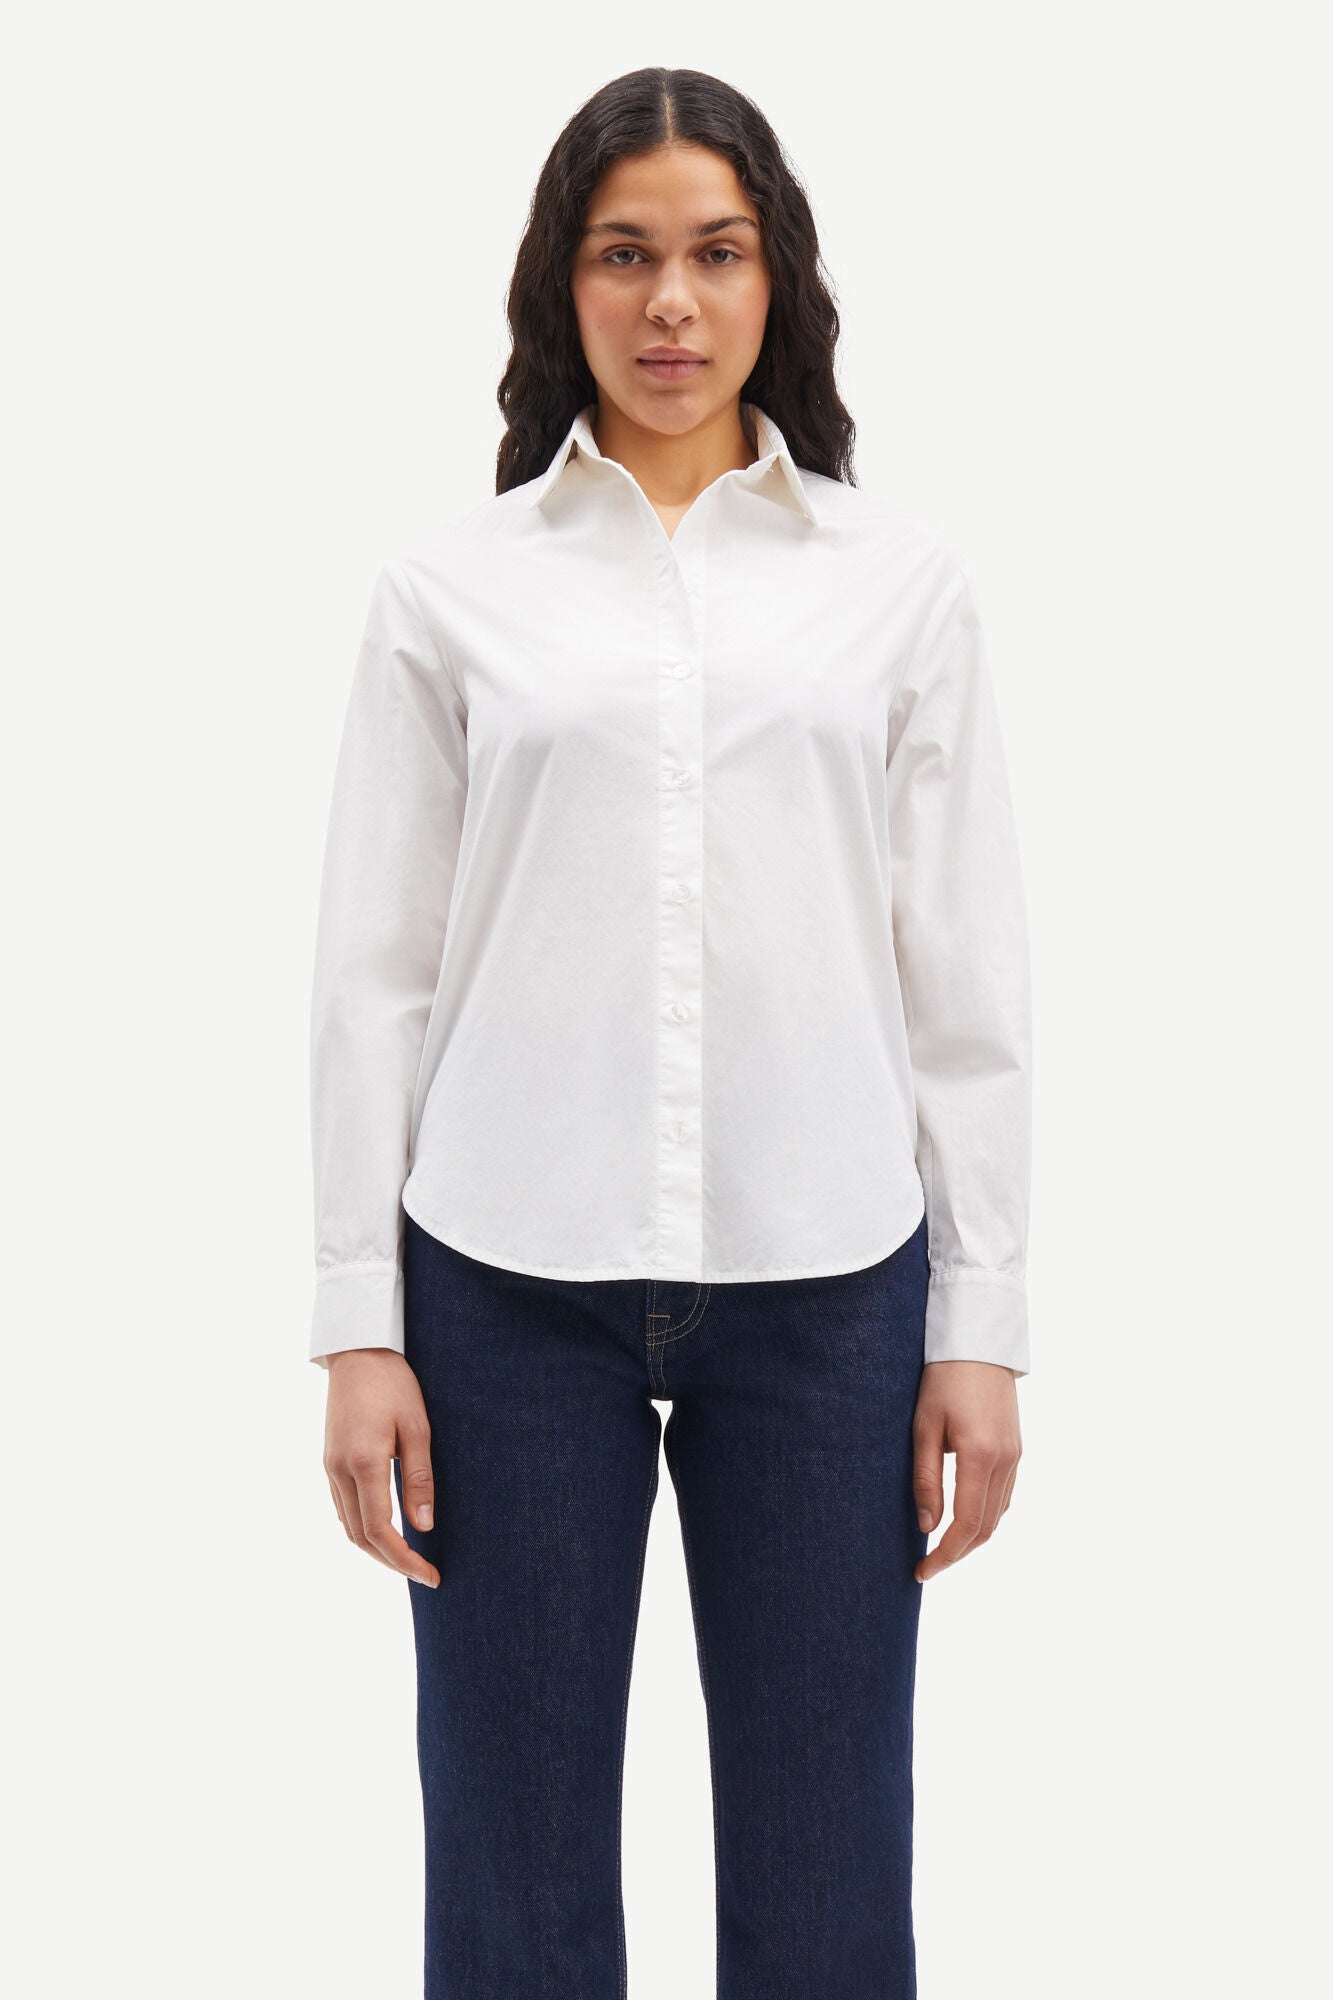 Samadisoni shirt in white